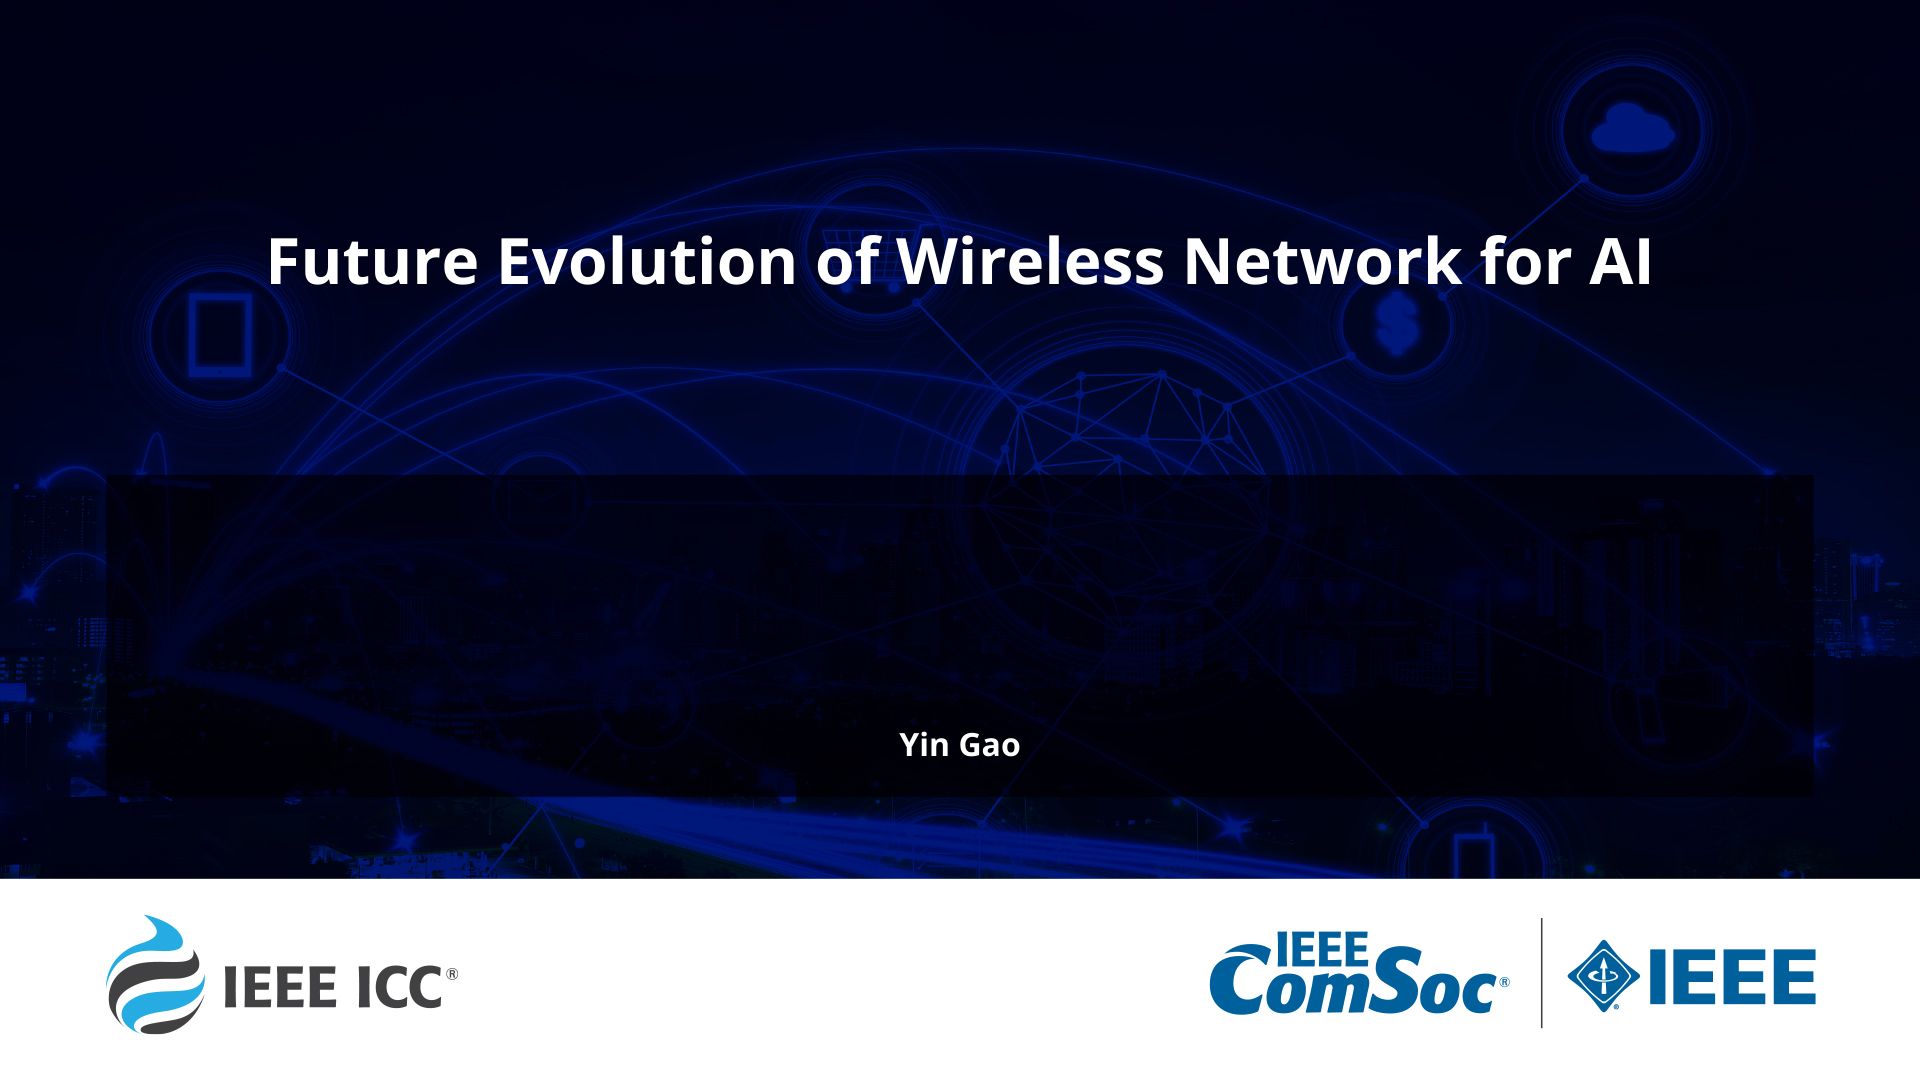 Evolution of wireless networks.